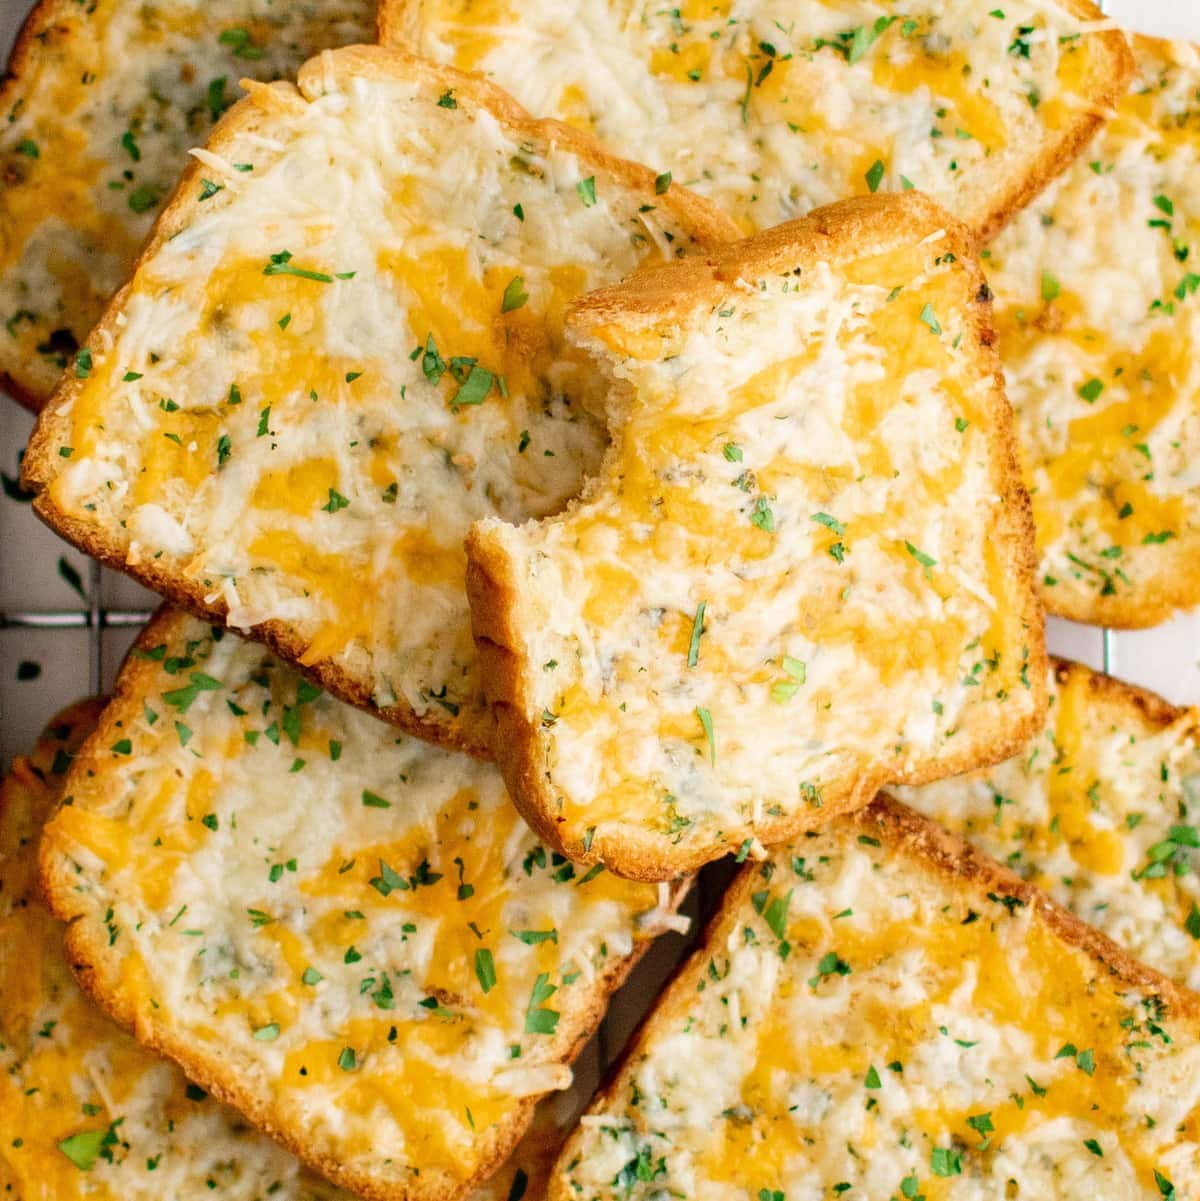 https://www.yellowblissroad.com/wp-content/uploads/2021/08/Garlic-Cheese-Toast-social.jpg